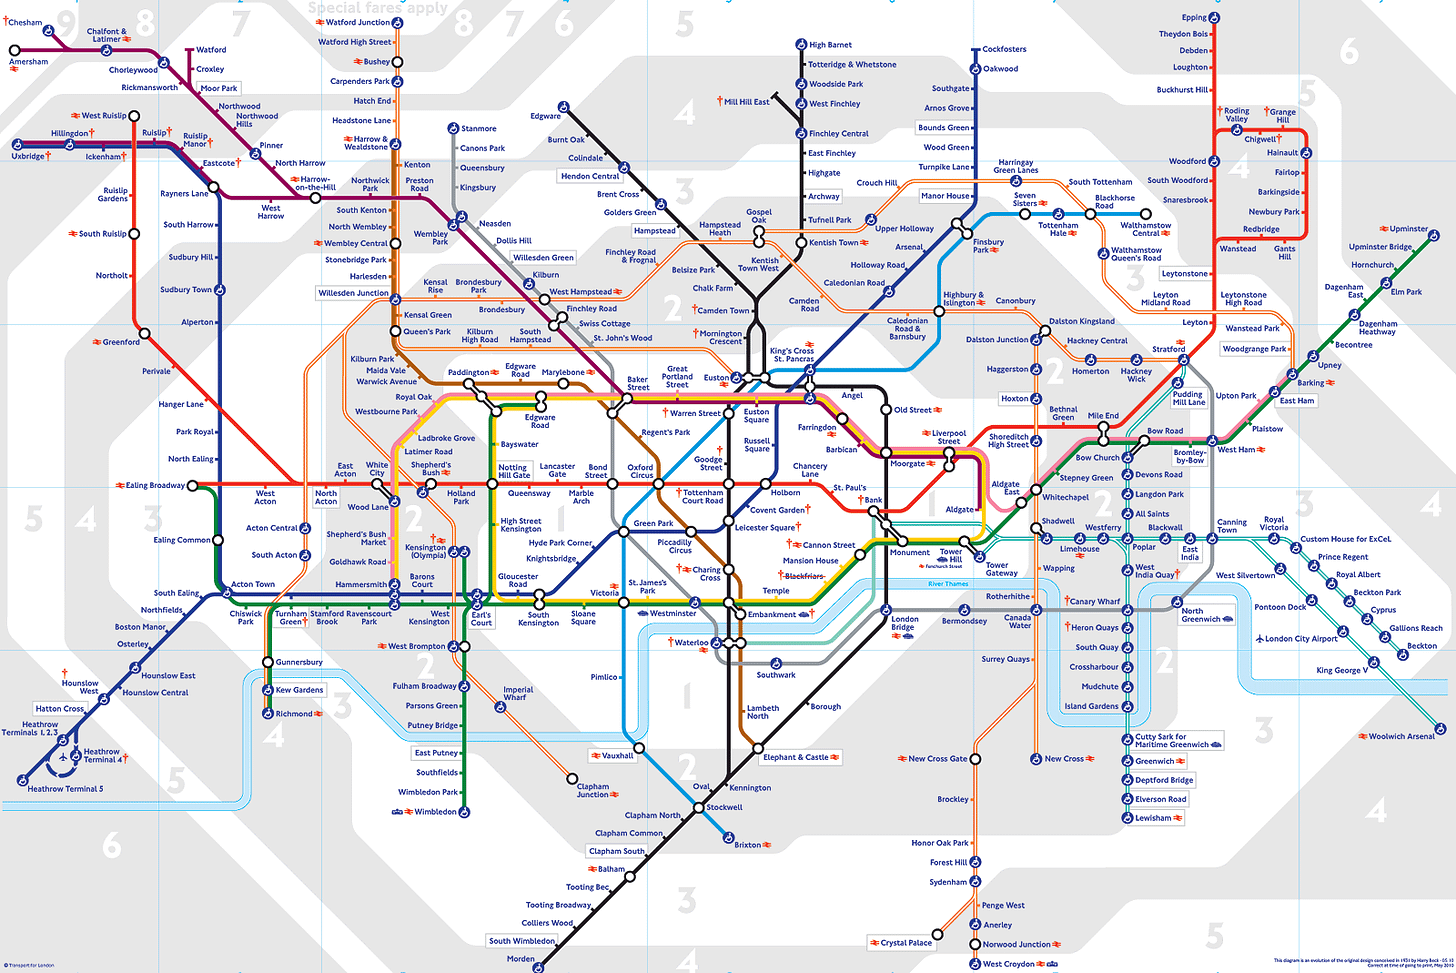 https://www.bbc.co.uk/london/travel/downloads/tube_map.html